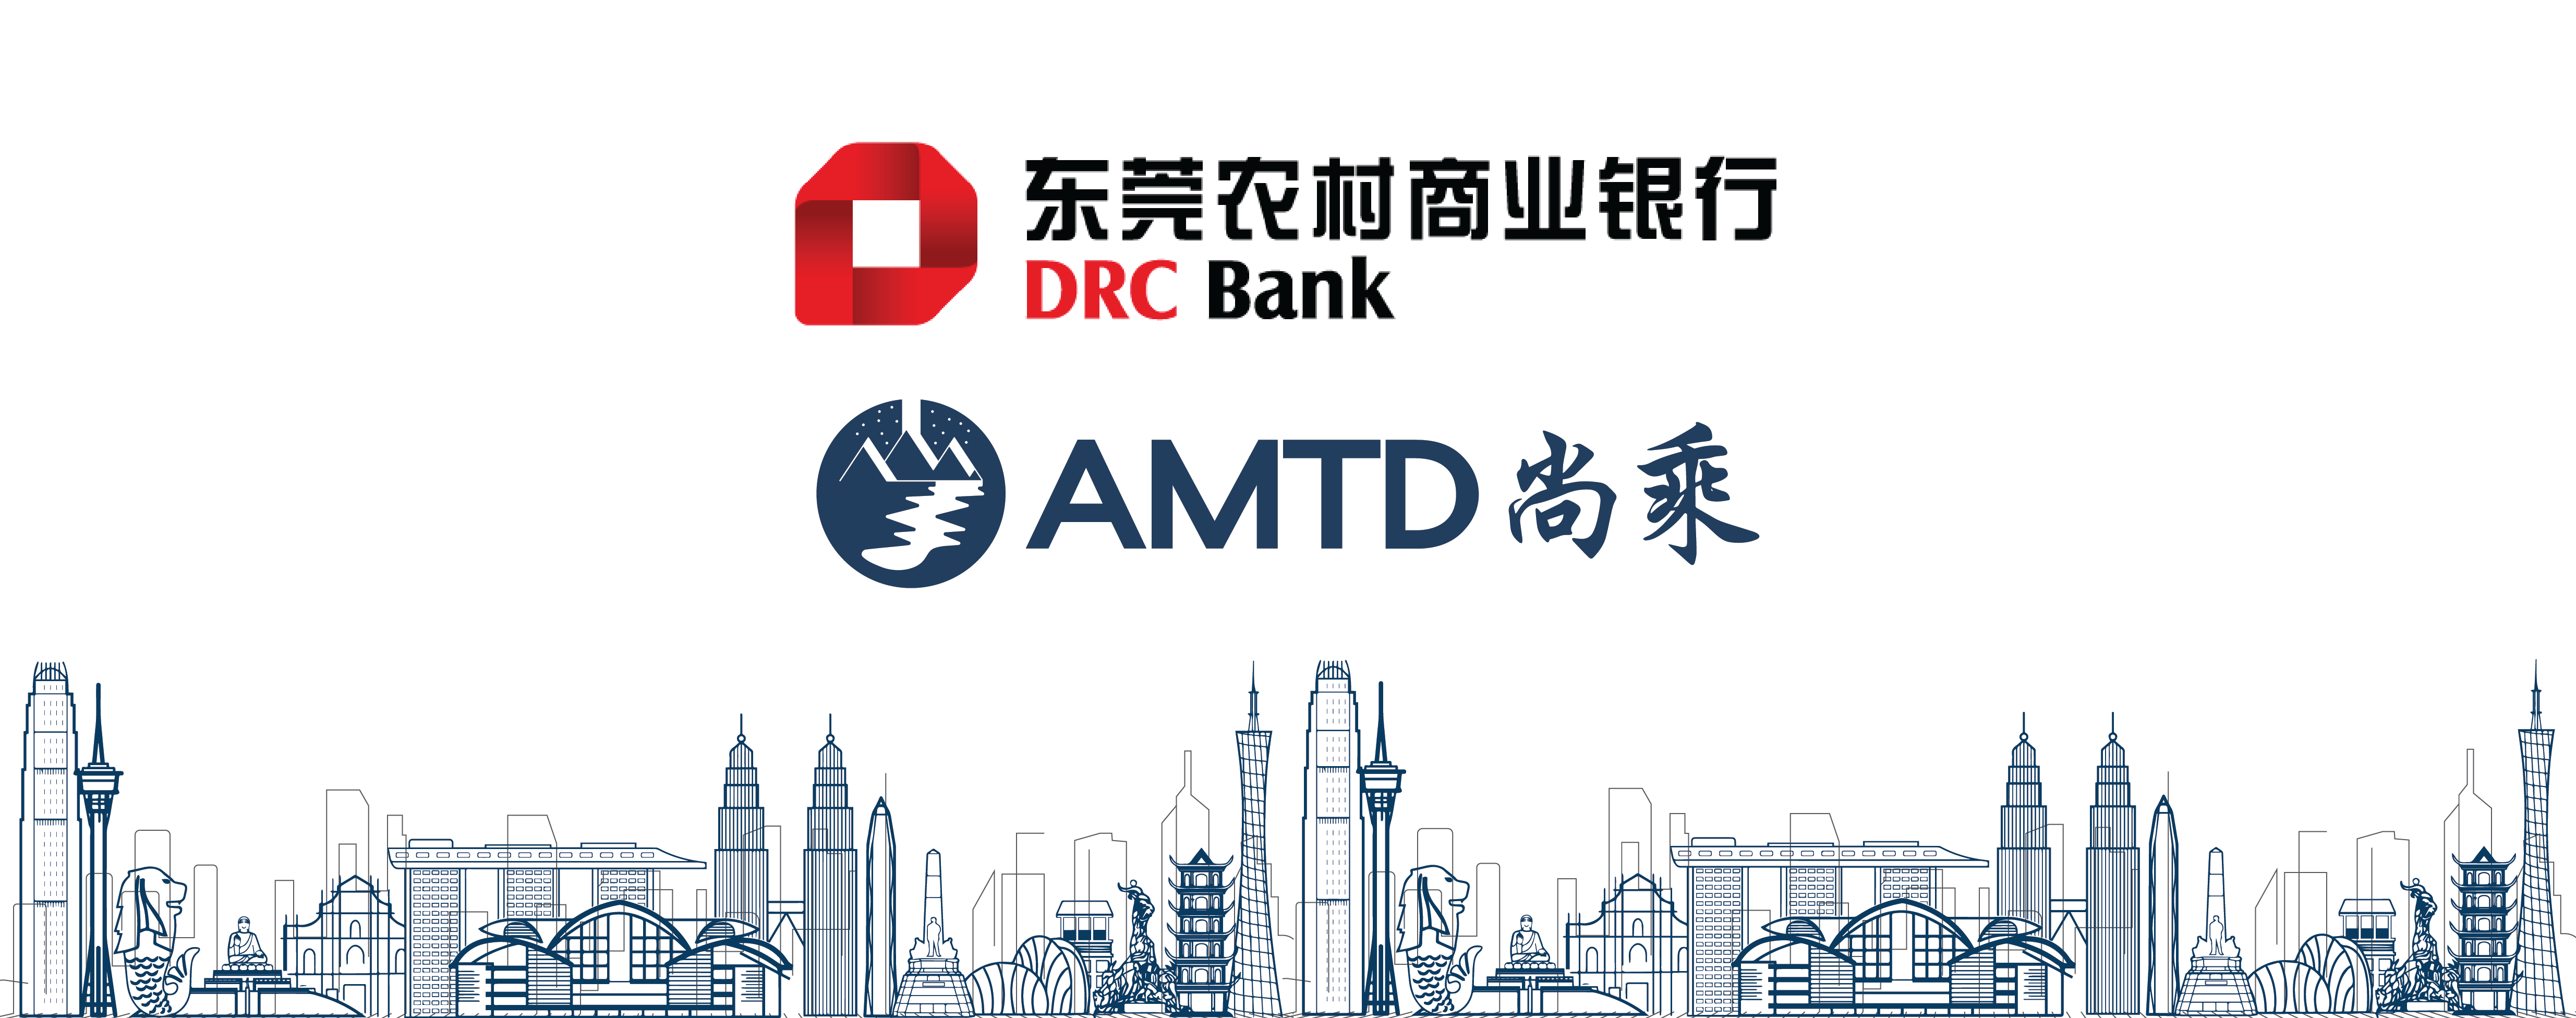 AMTD Deals | AMTD Completes Hong Kong IPO of Dongguan Rural Commercial Bank